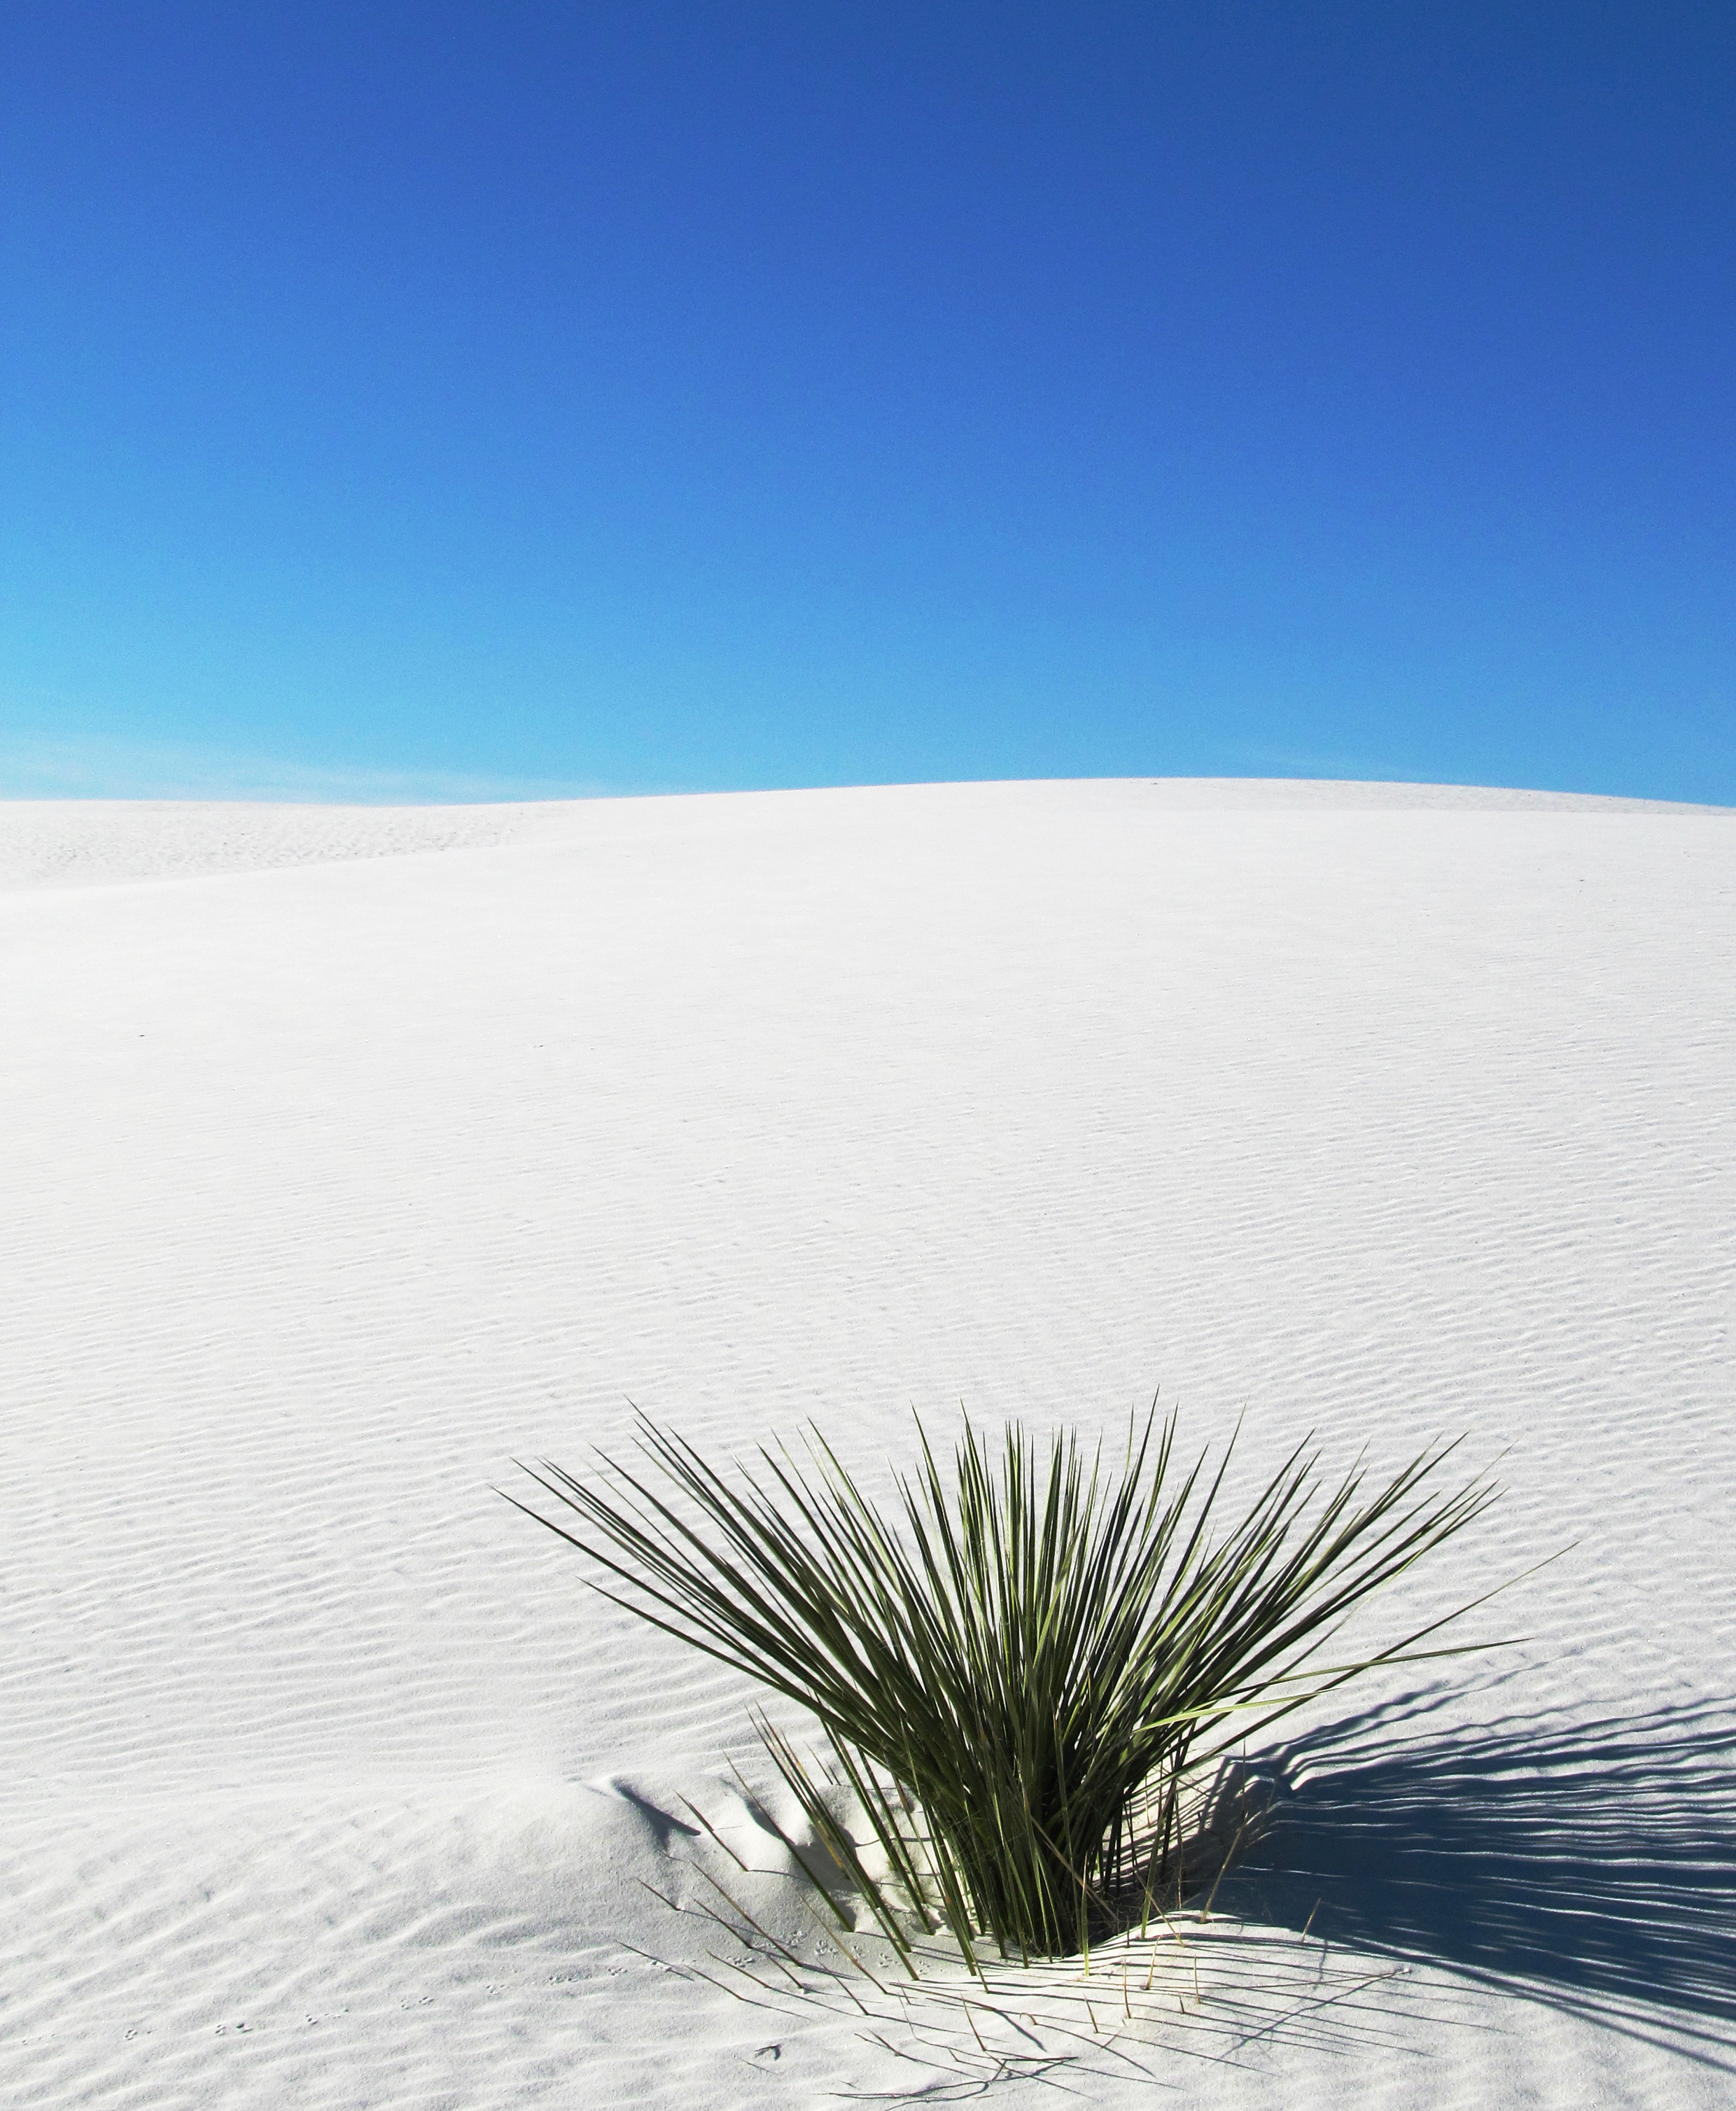 white-sands-national-park-soaptree-yucca-nps.jpg